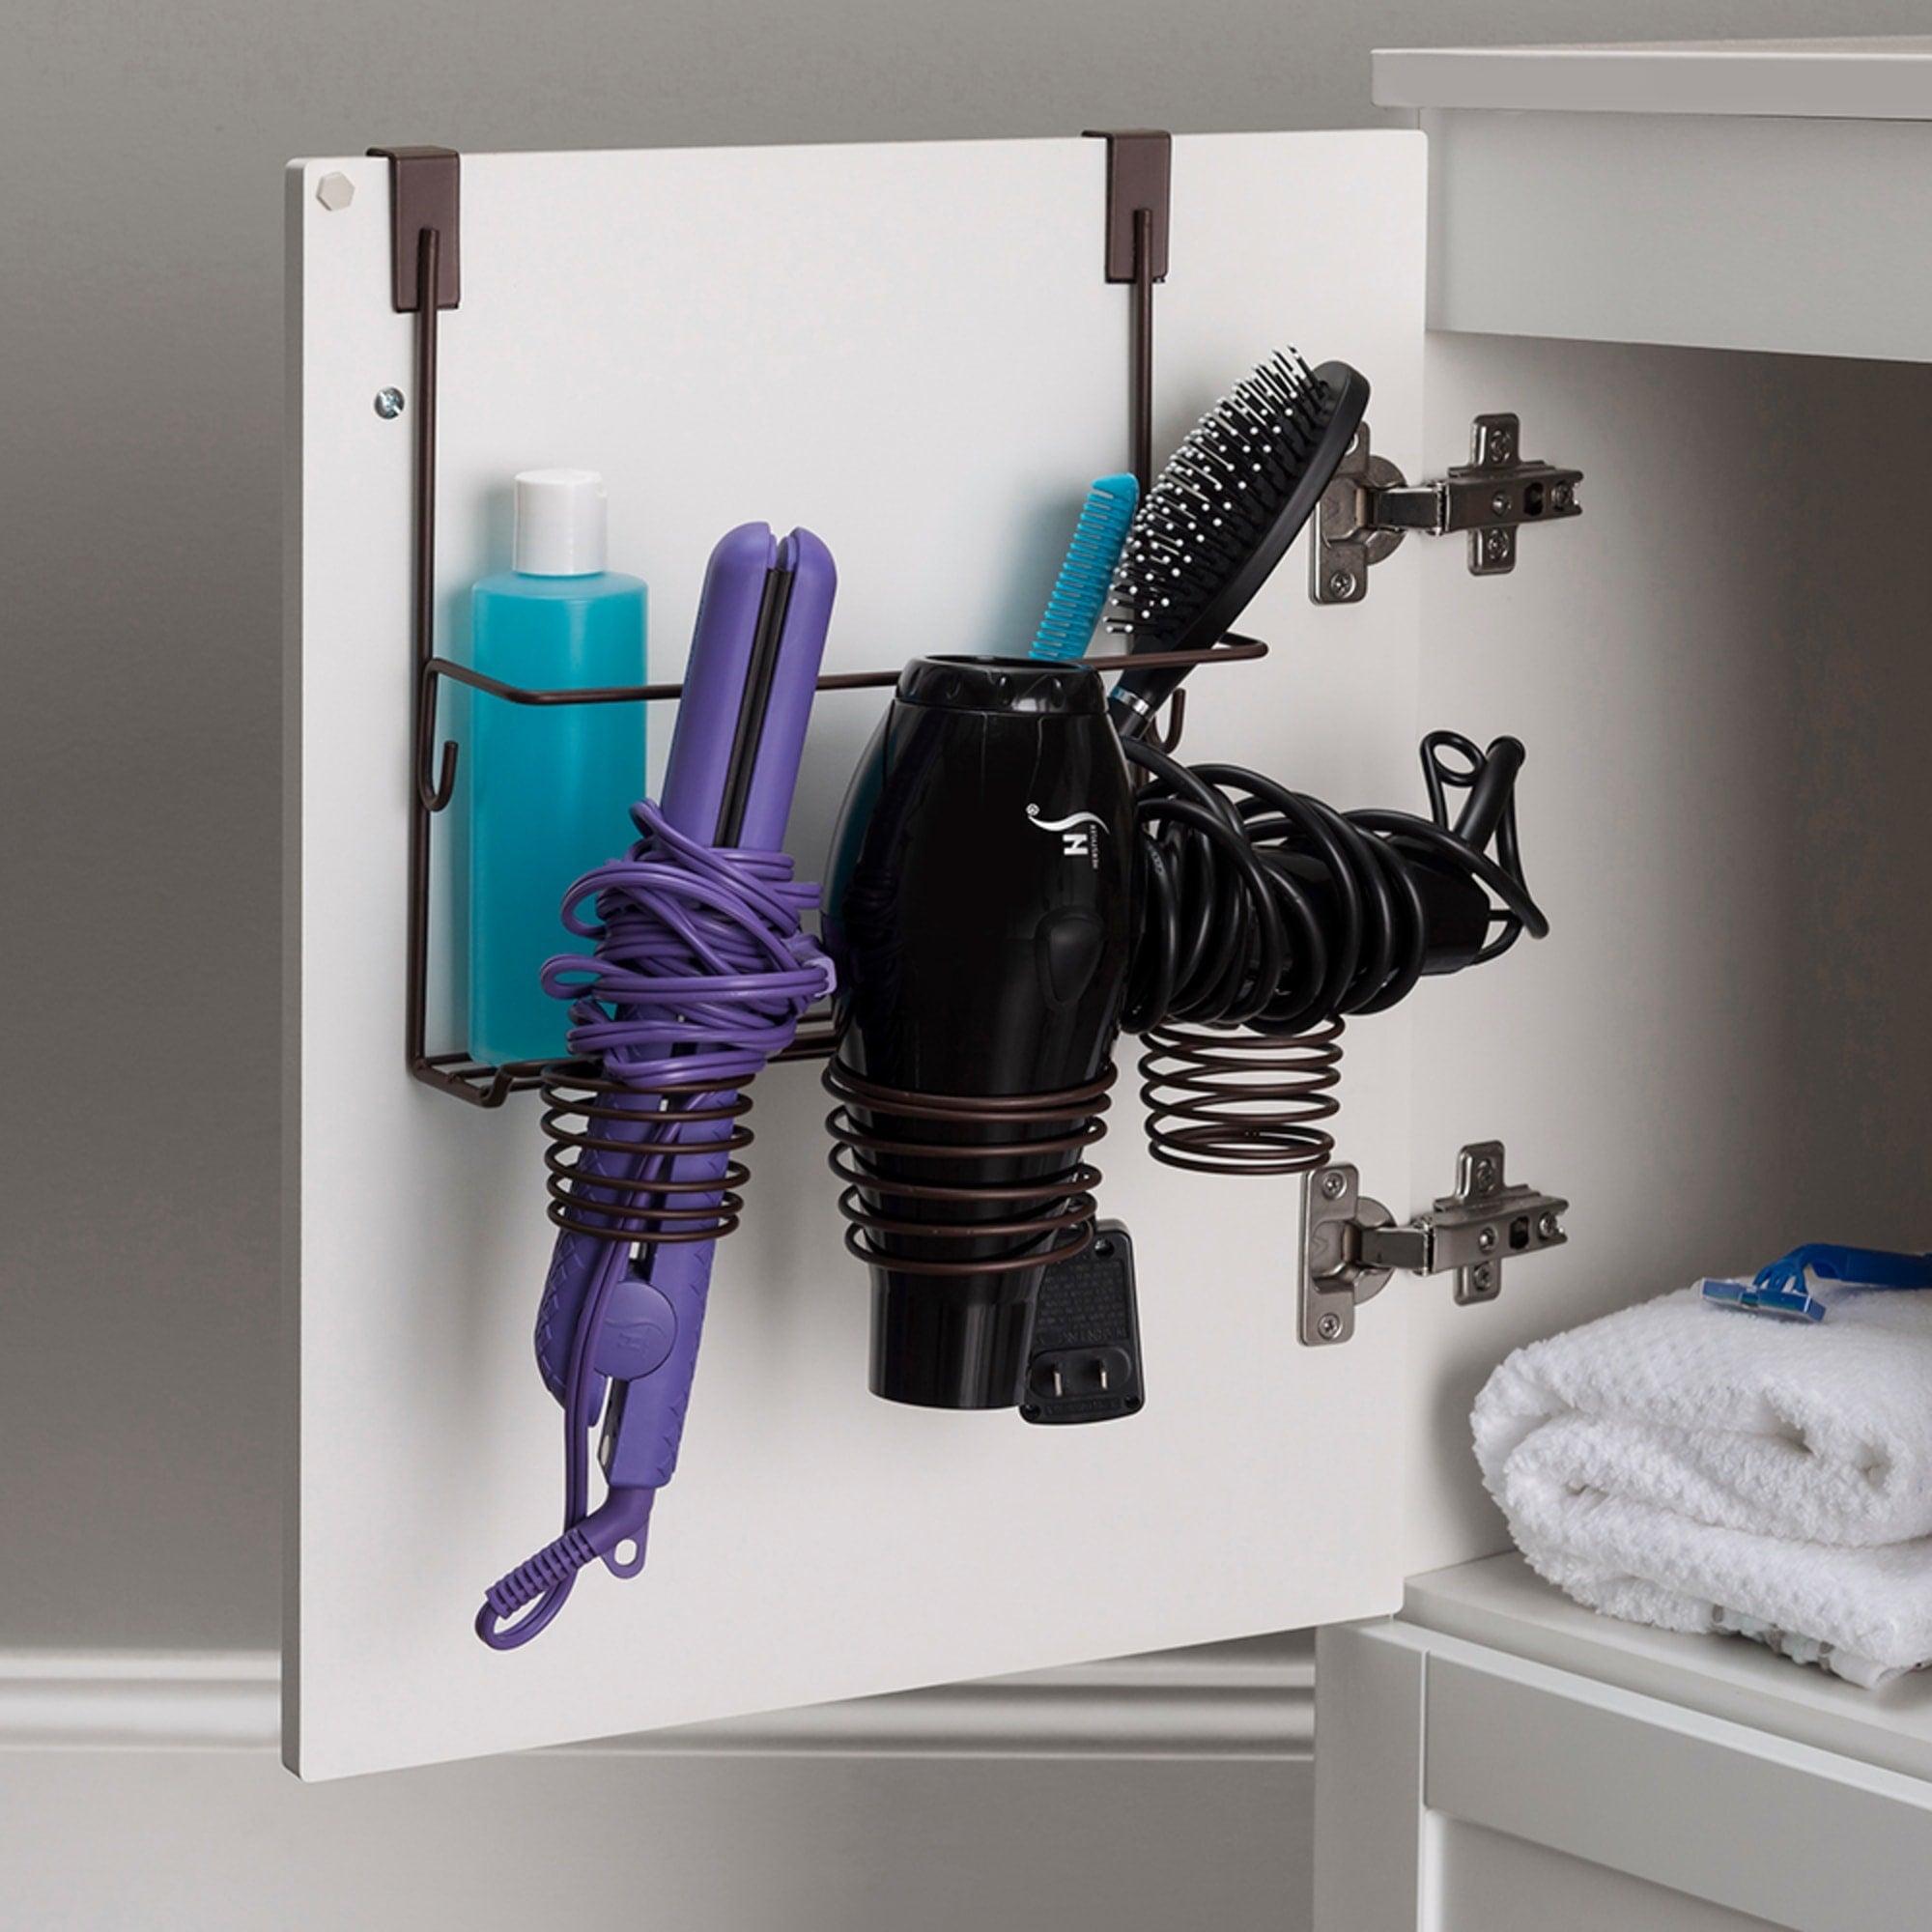 Home Basics Over the Cabinet Bronze Hairdryer Holder $6 EACH, CASE PACK OF 12